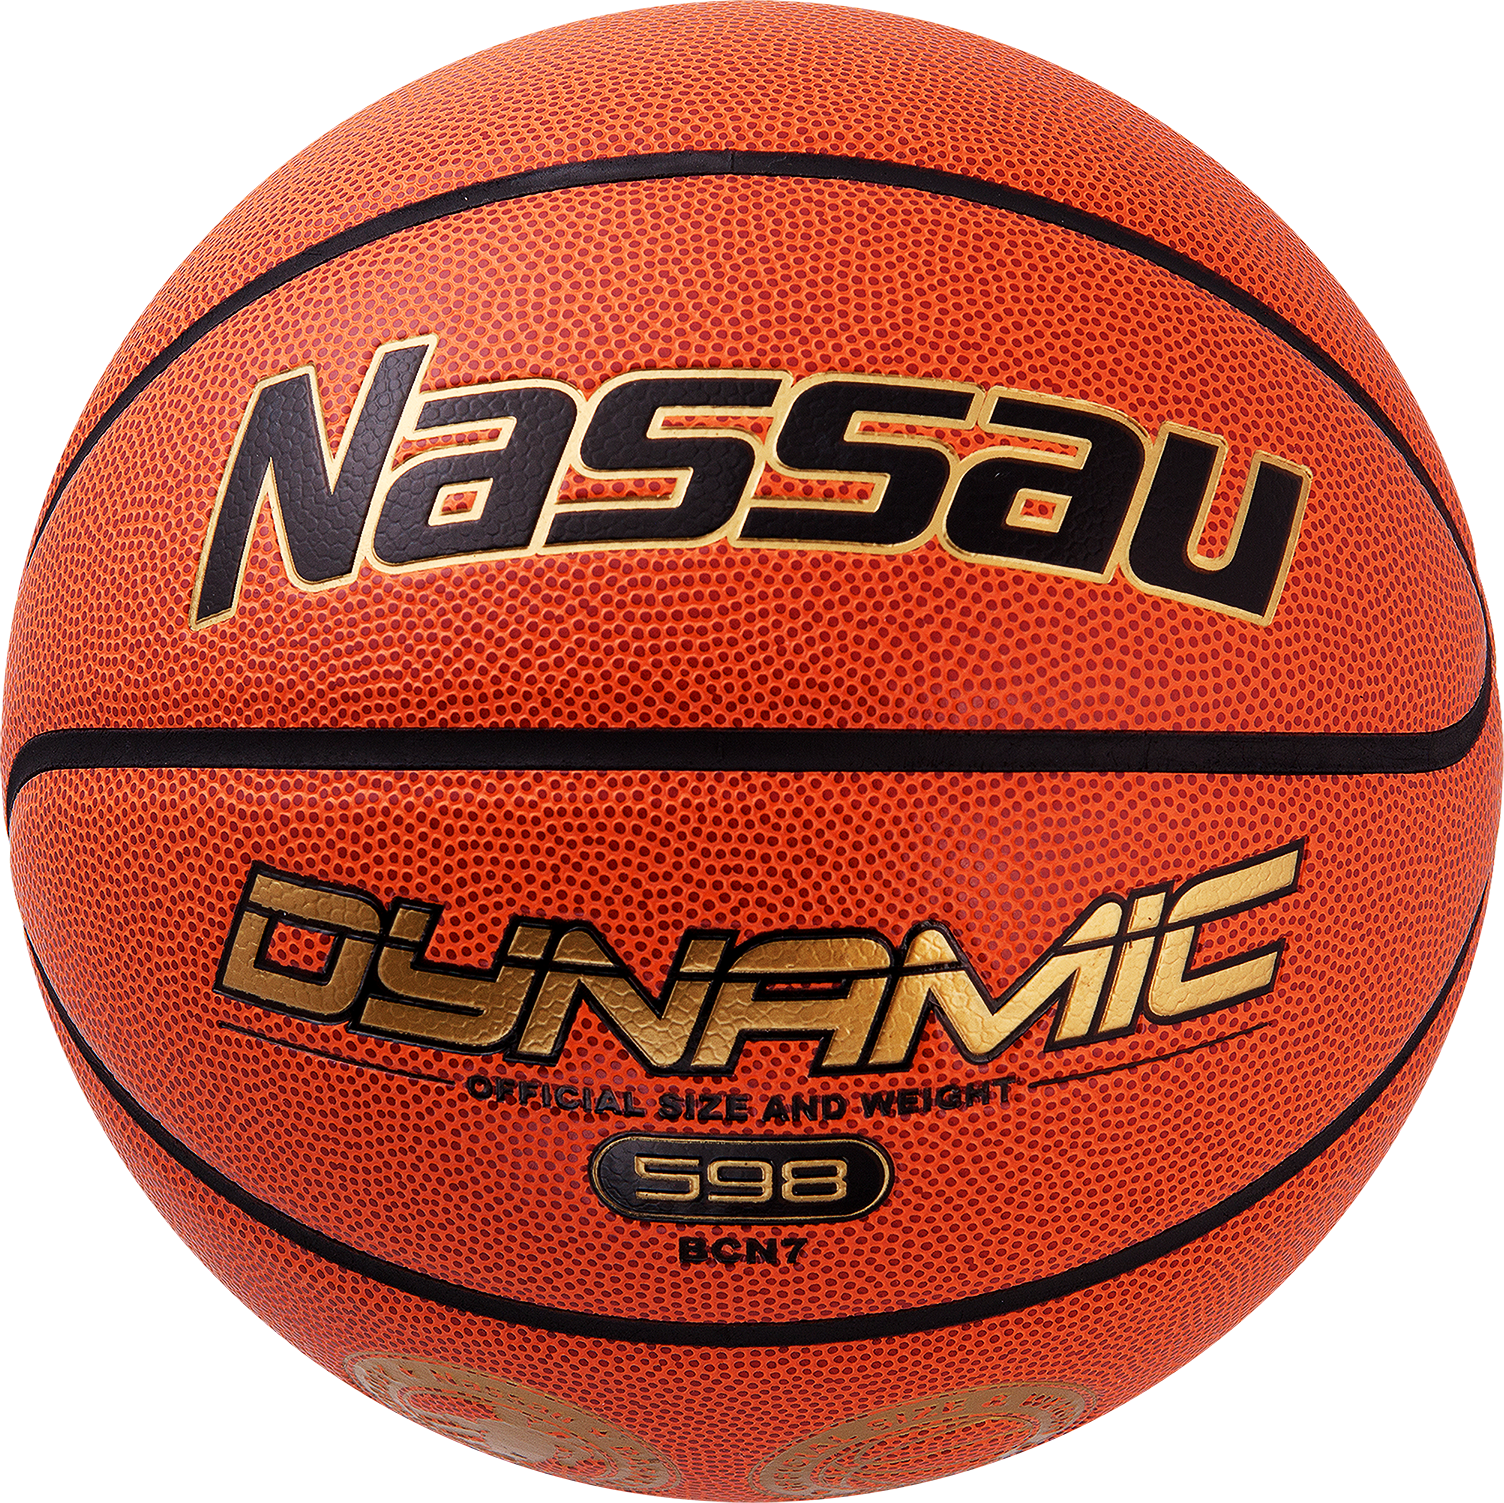 Nassau Dynamic 598 Basketball